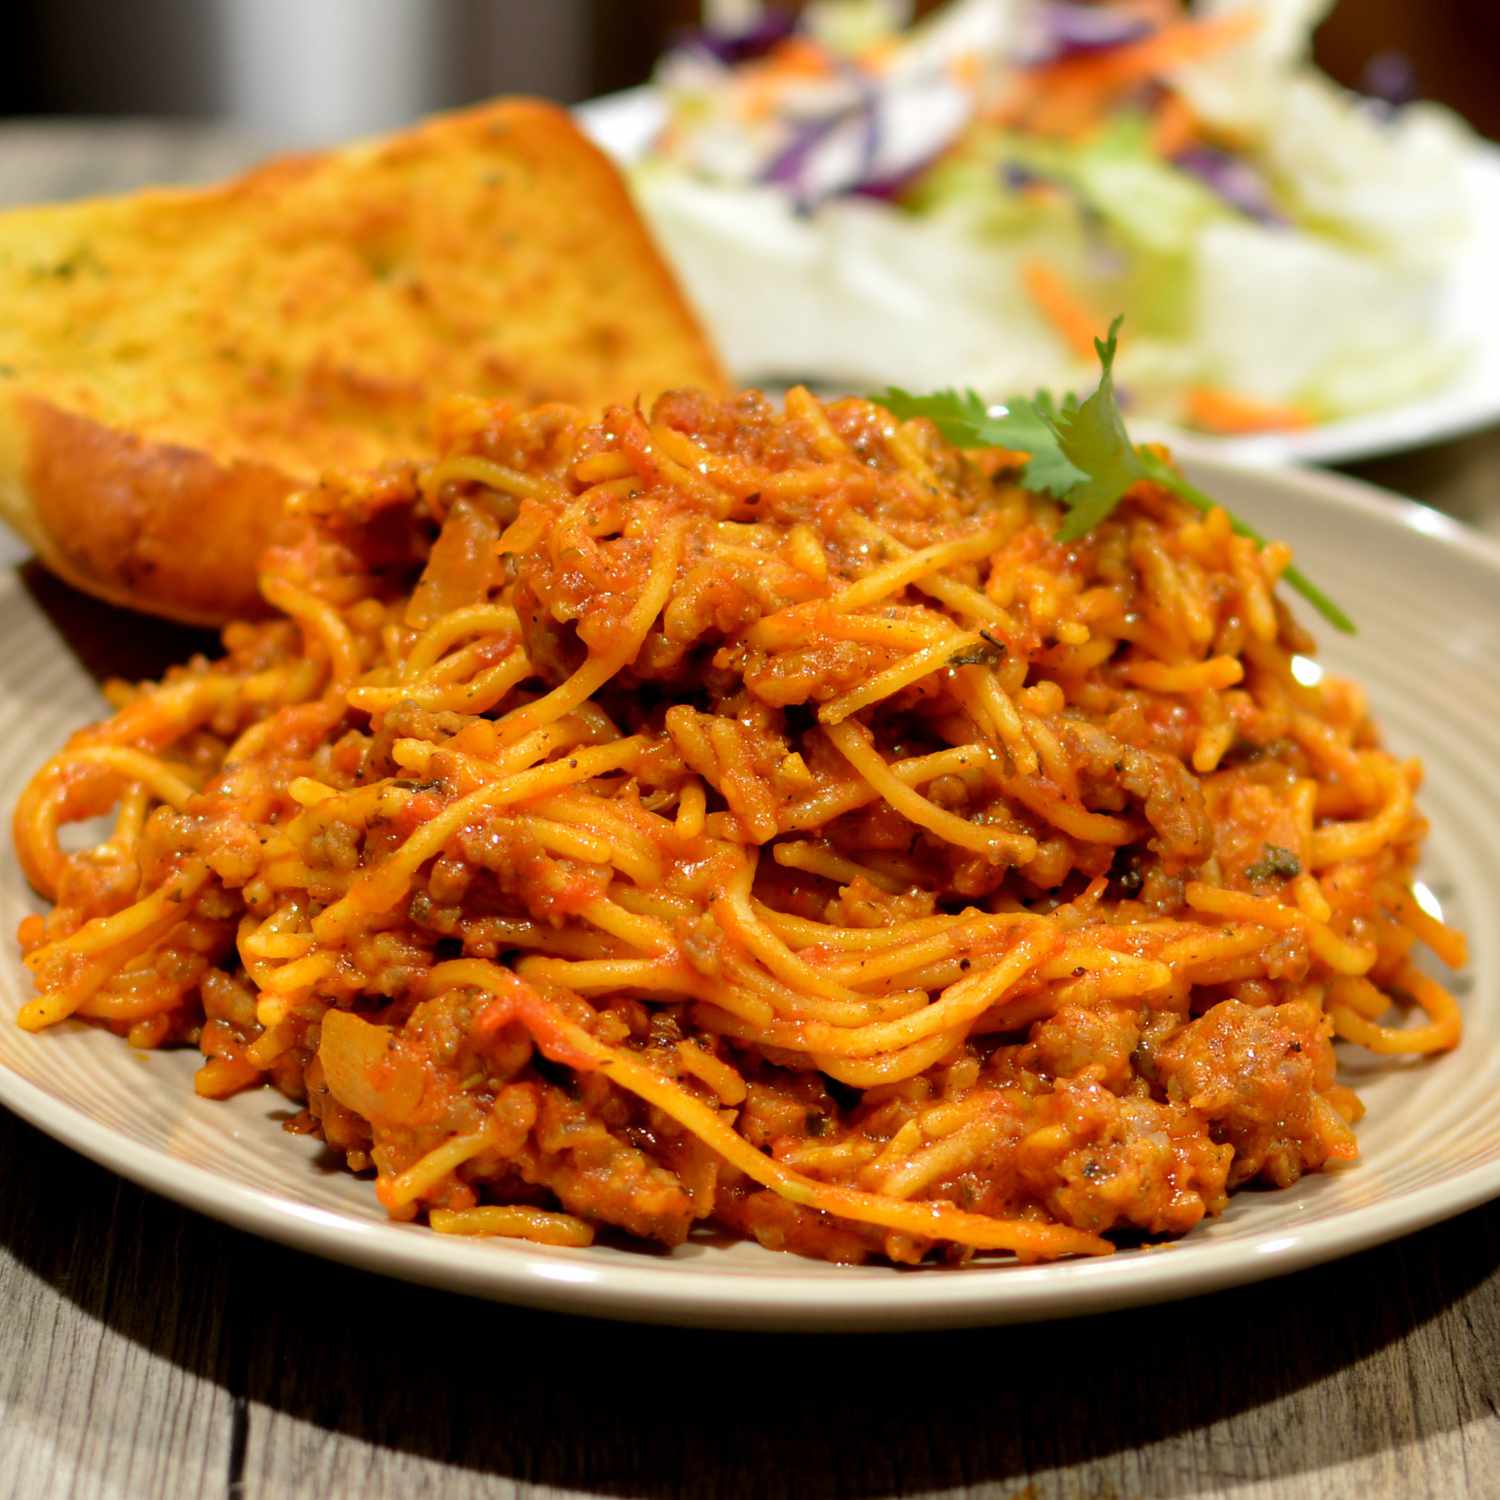 Spaghetti с одним пенсом с мясным соусом